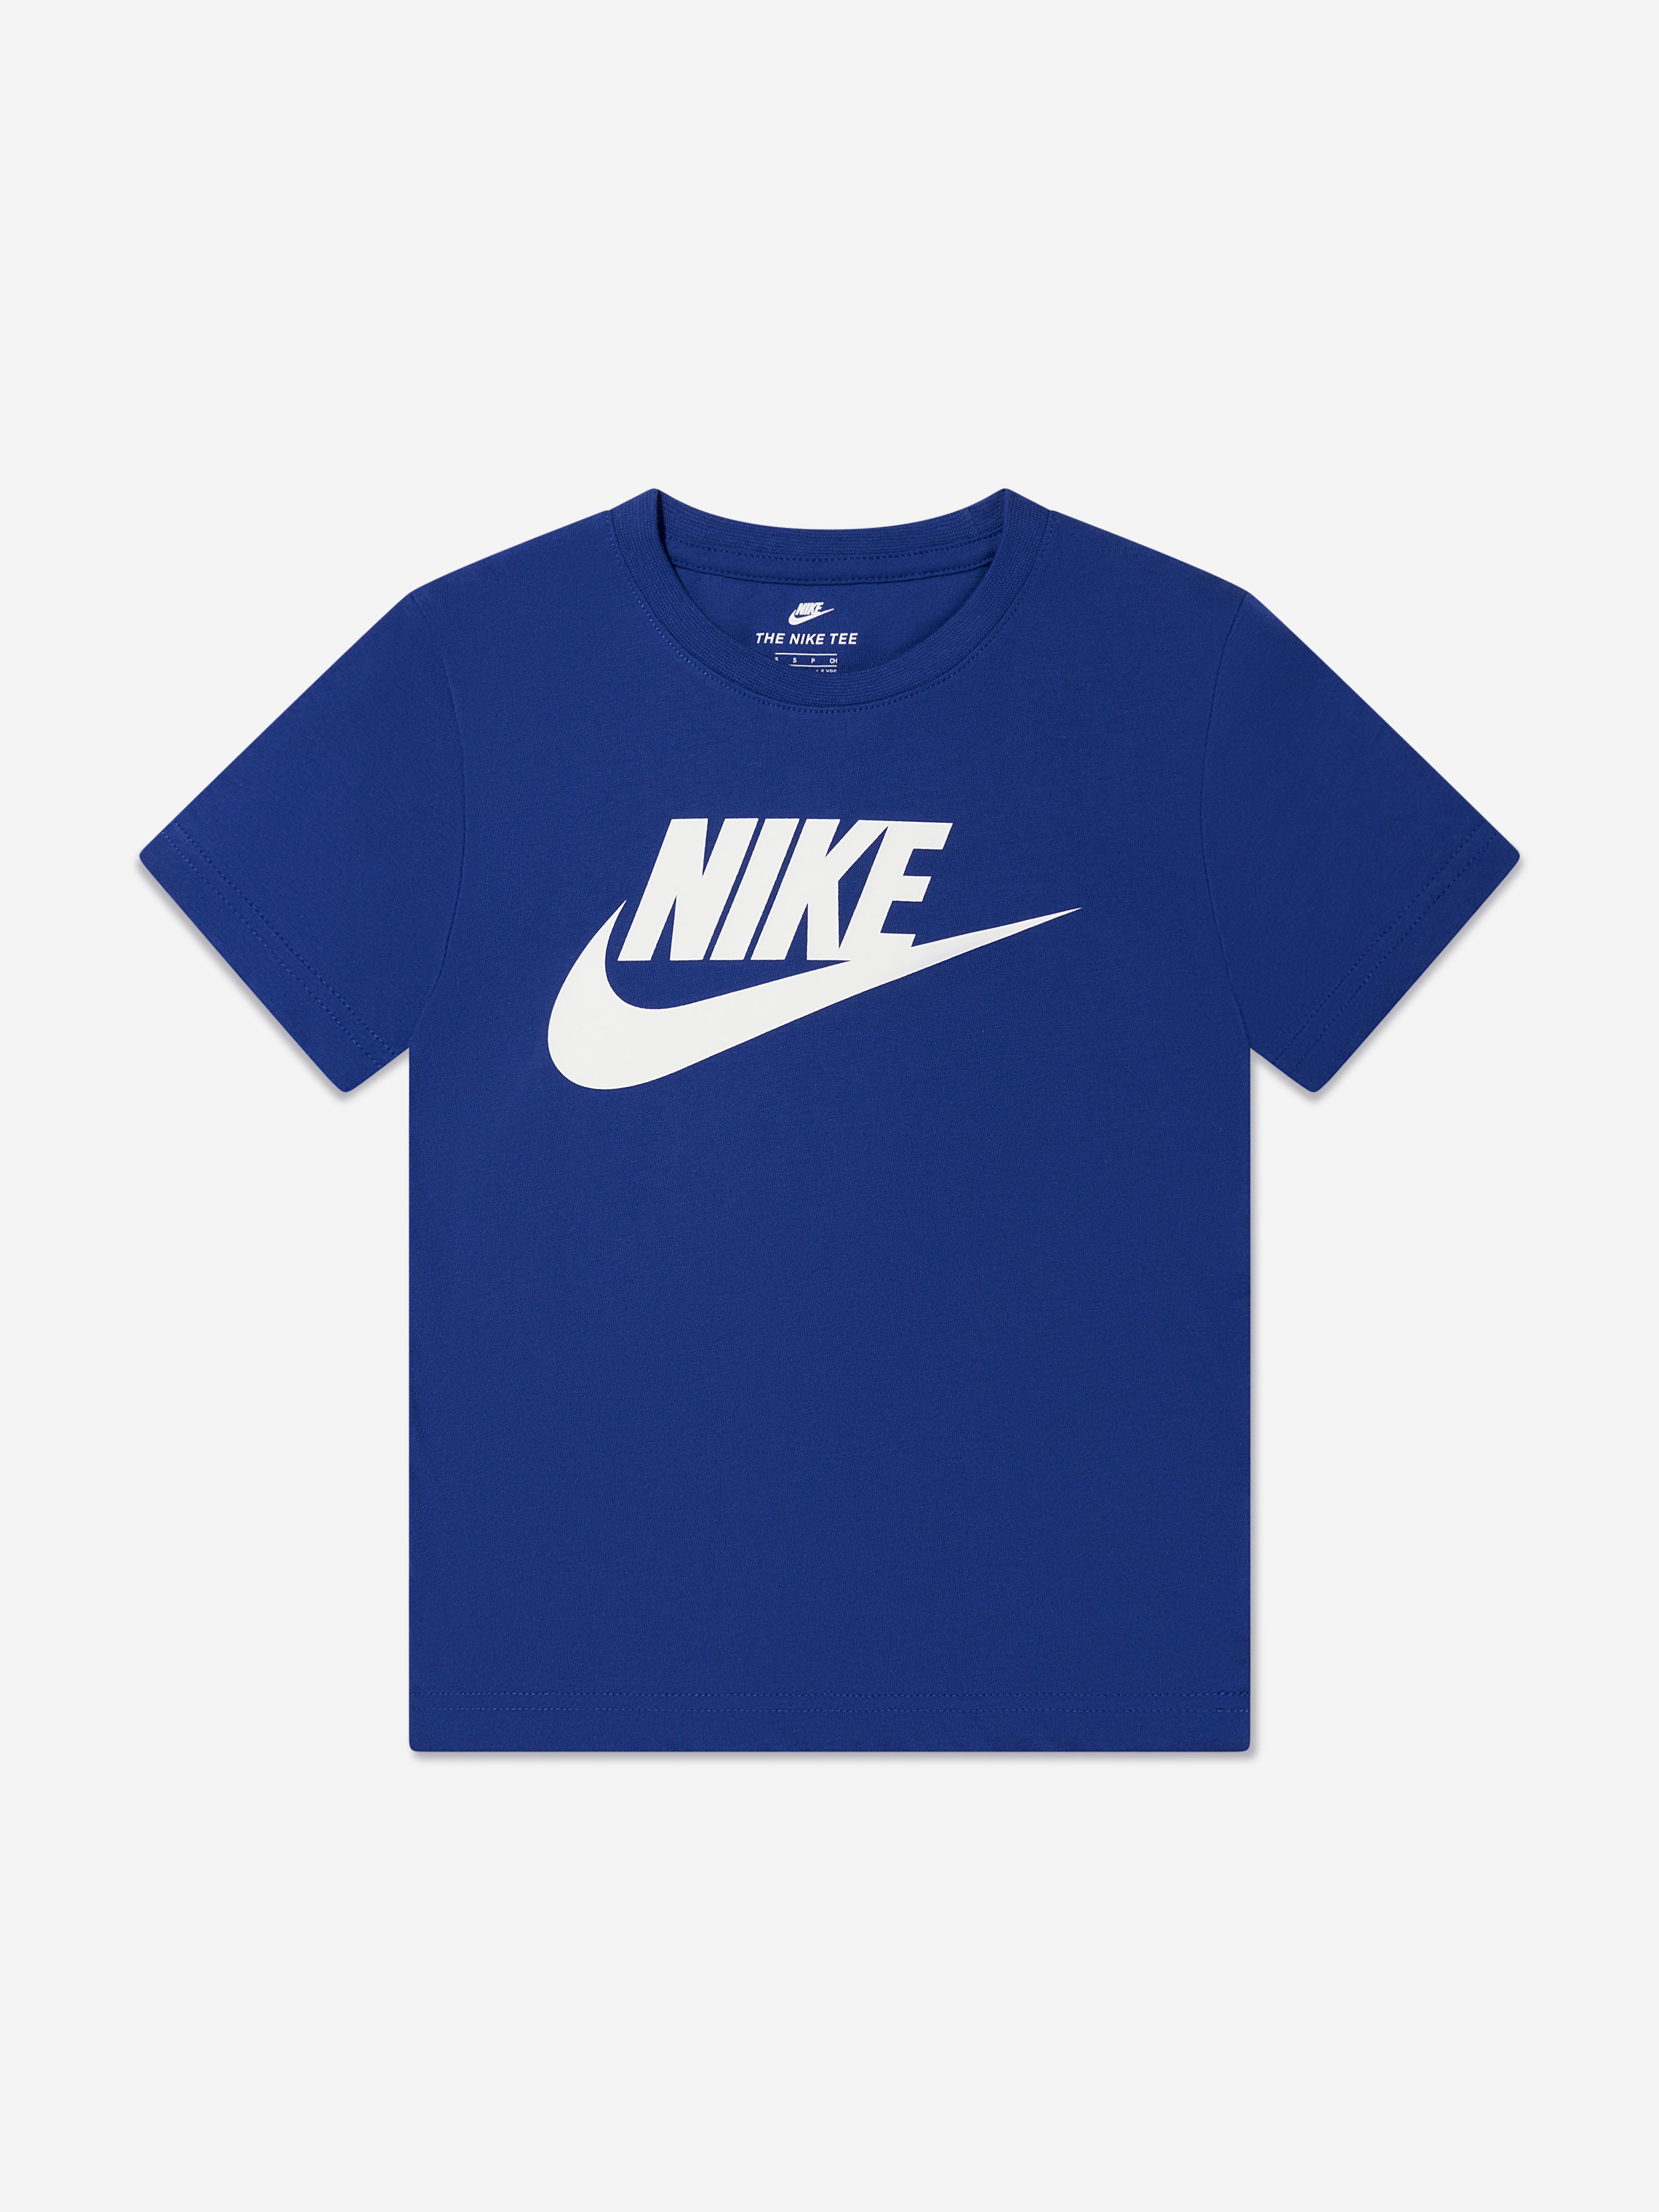 Nike Boys Cotton Jersey Logo T-Shirt | Childsplay Clothing